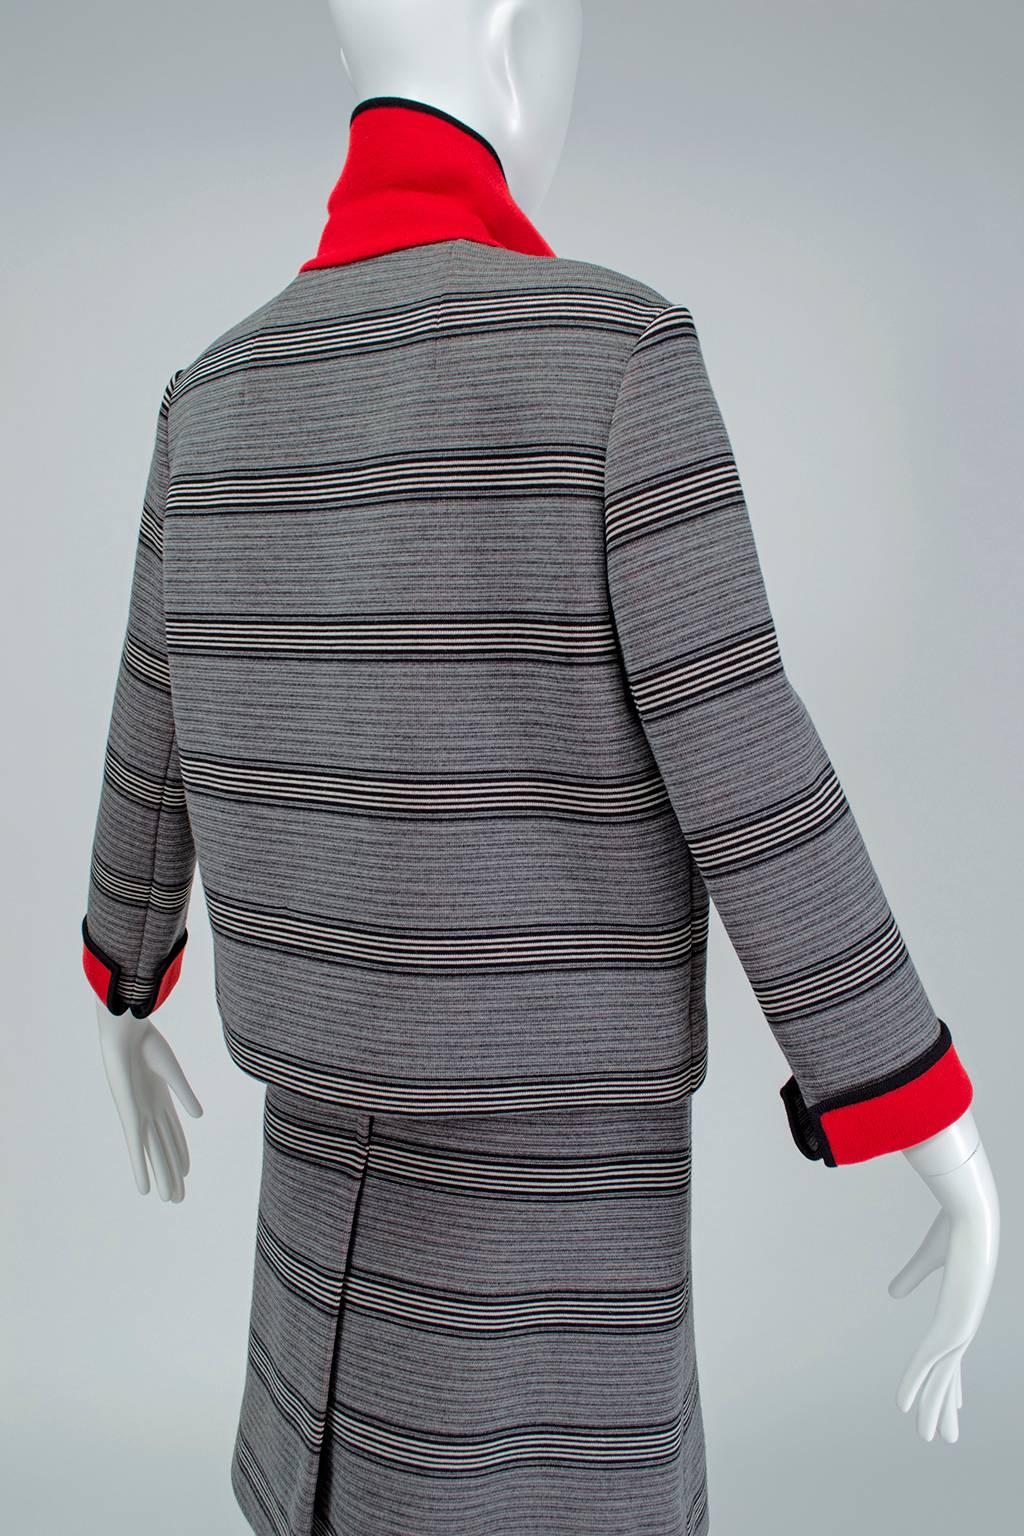 Mod Italian Dolce Vita Black and Red Stripe A-Line Wool Vespa Suit- M, 1960s en vente 1